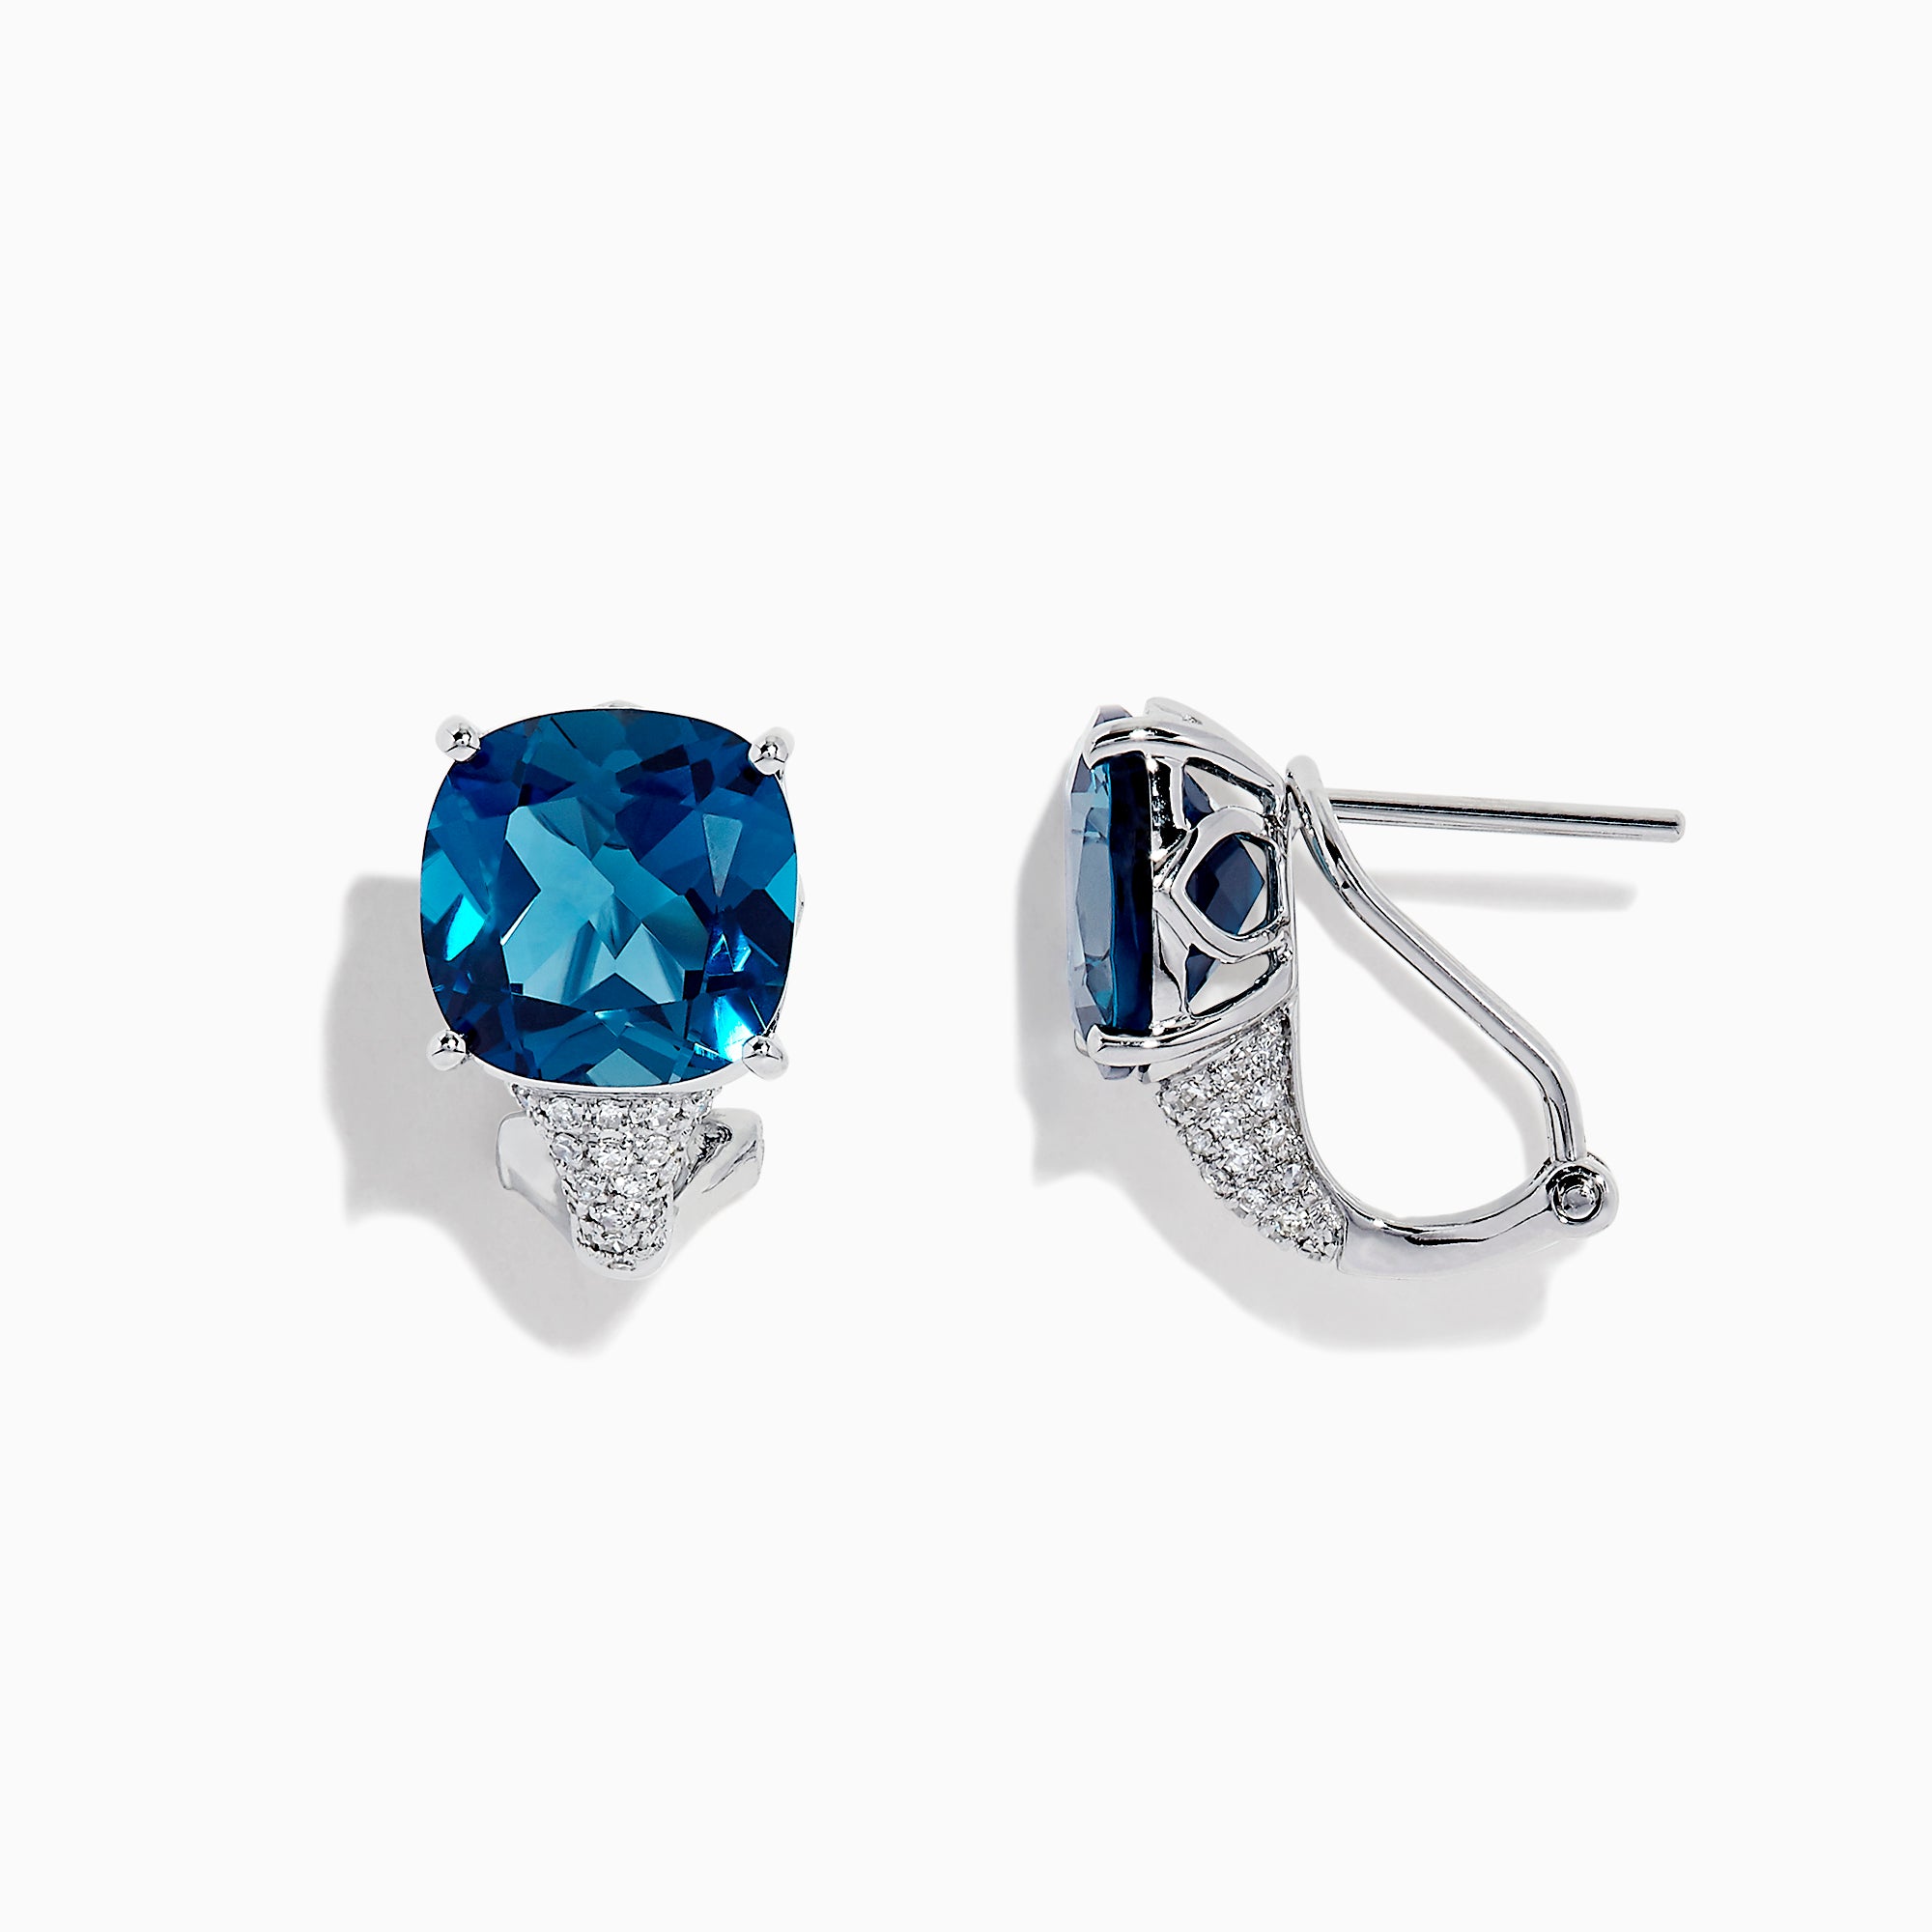 Effy Ocean Bleu 14K Gold London Blue Topaz and Diamond Earrings, 10.79 TCW